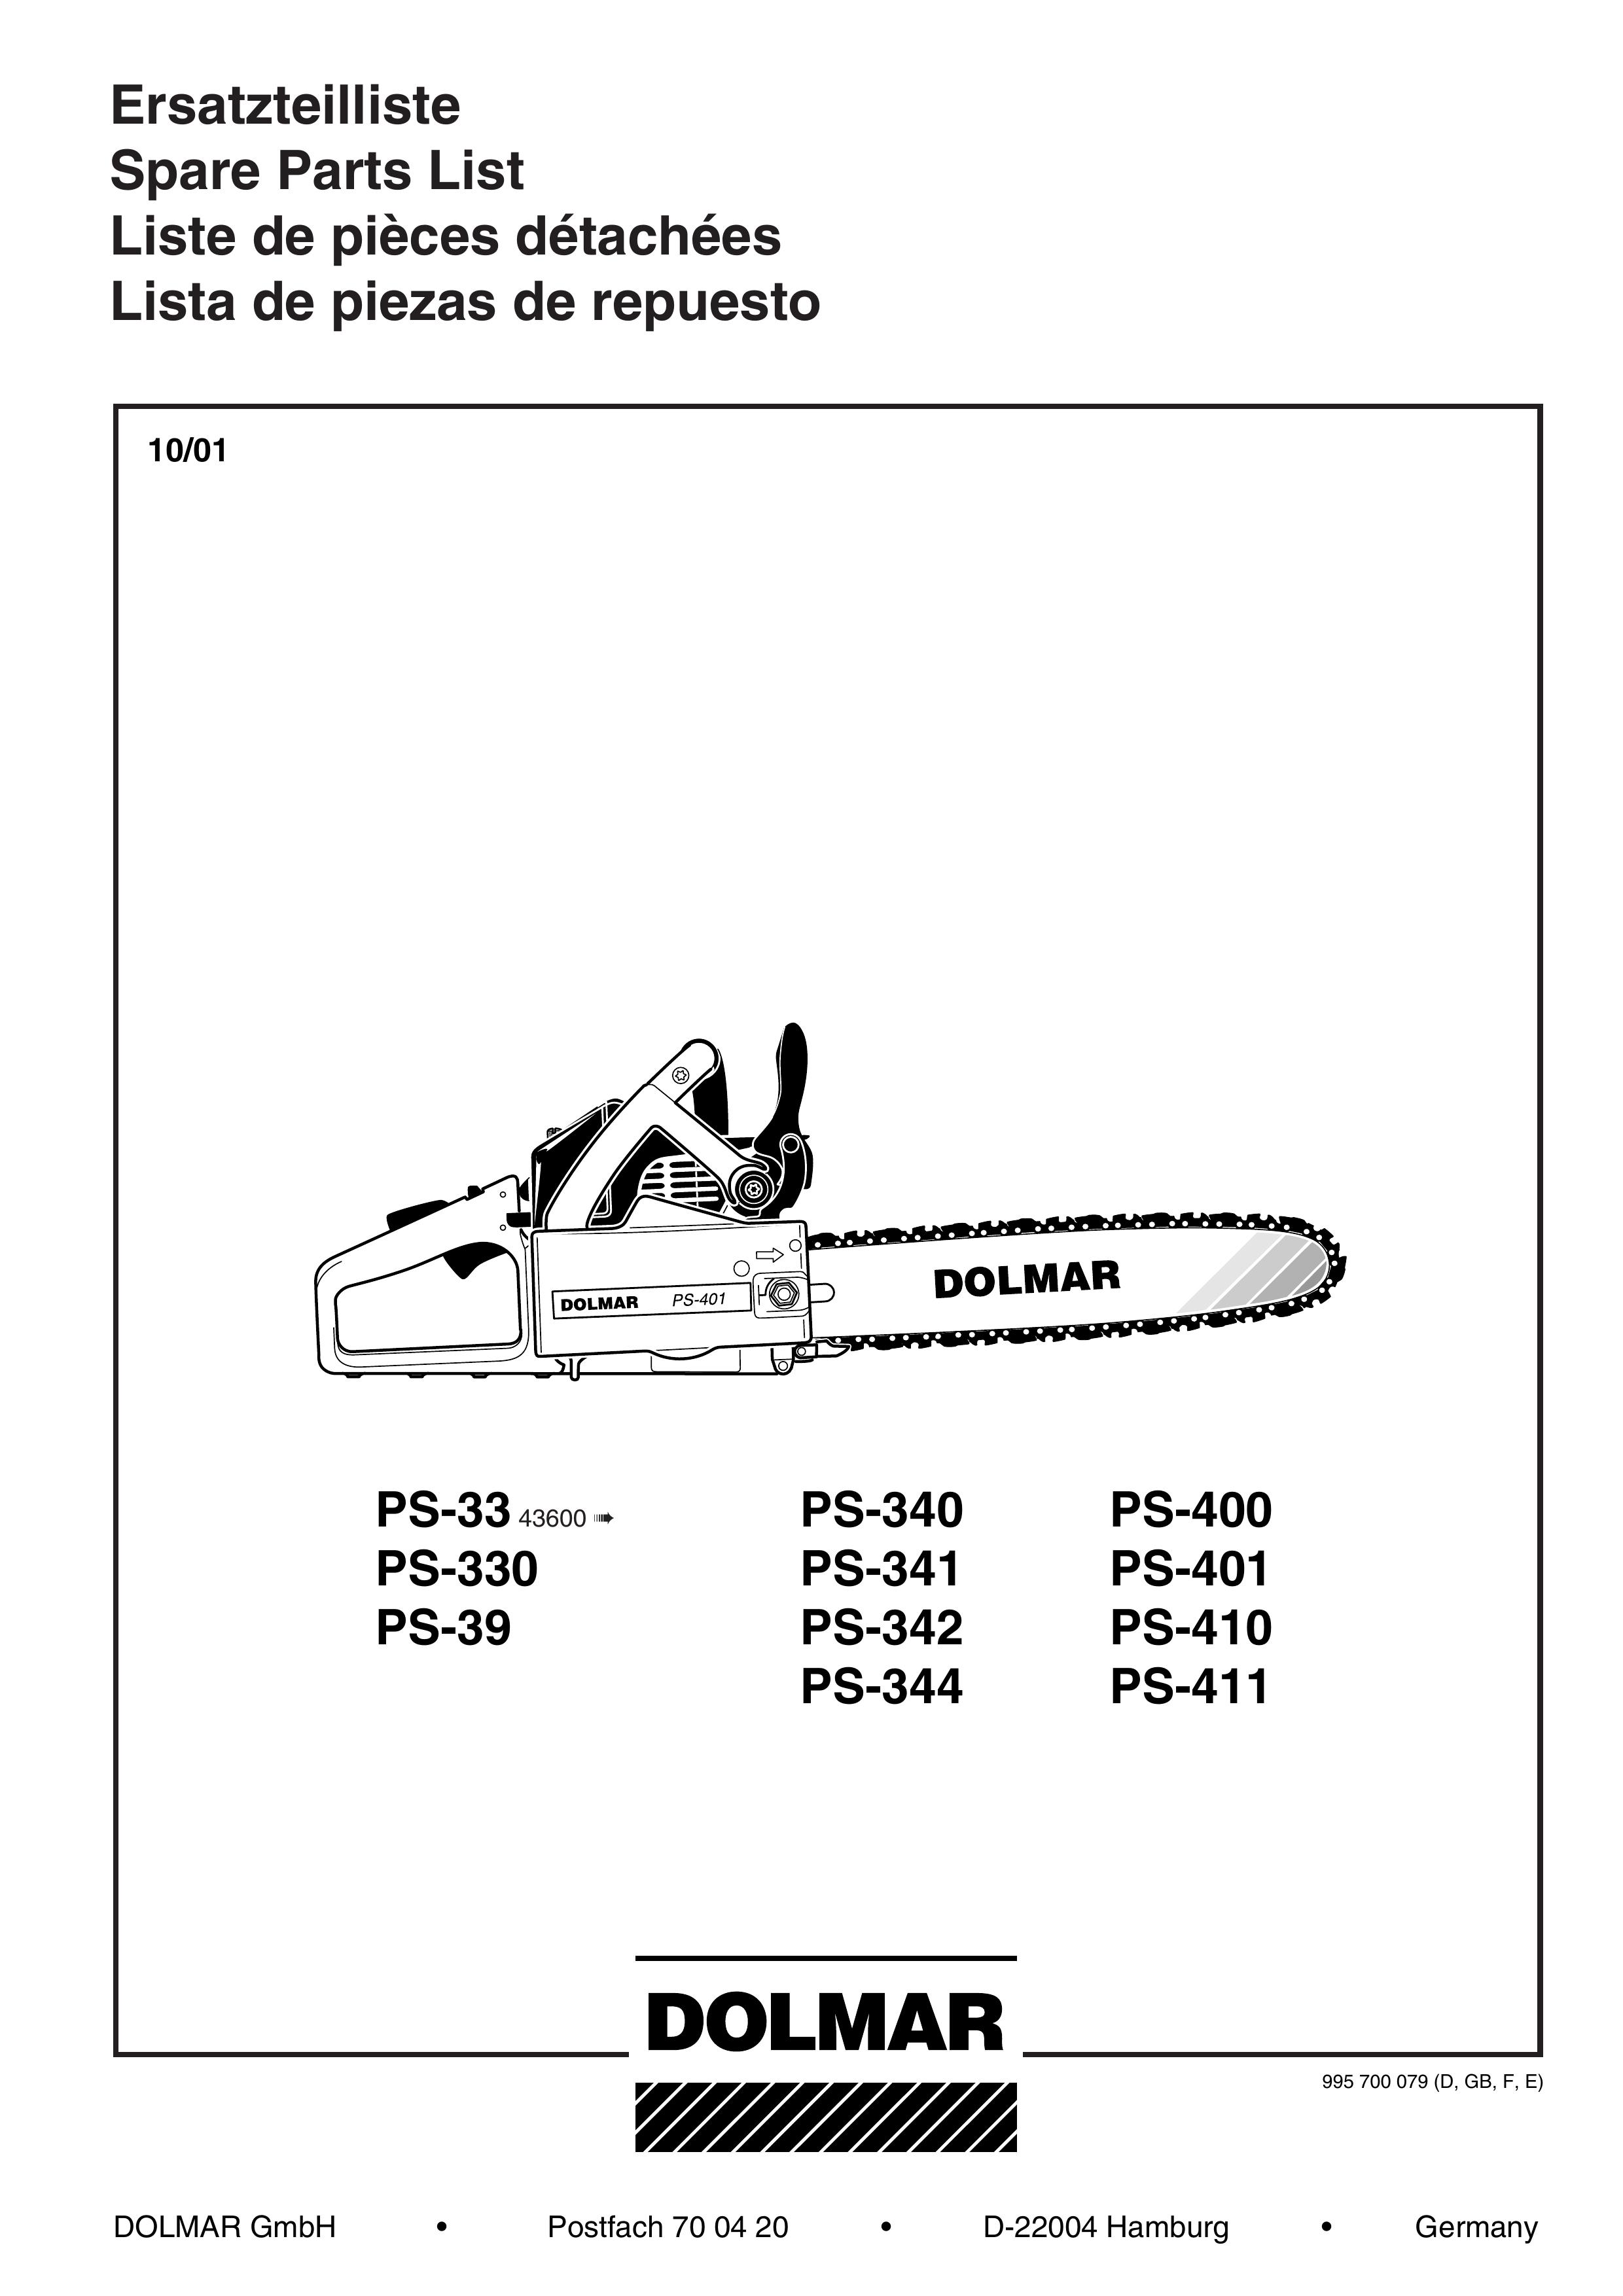 Dolmar PS-411 Chainsaw User Manual